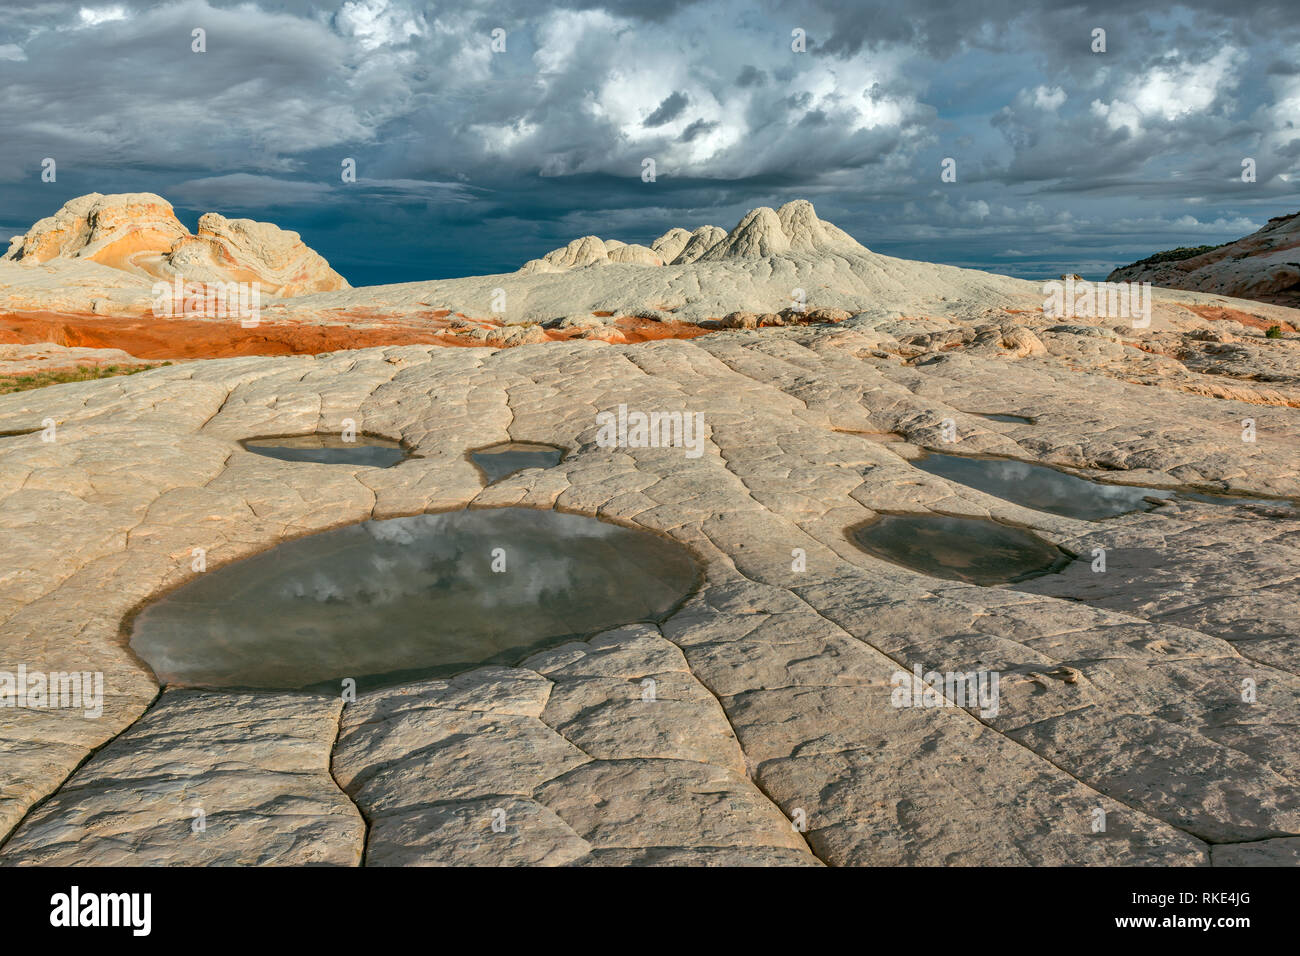 Los riscos de piedra arenisca, Vermillion Cliffs National Monument, meseta Paria, Arizona Foto de stock